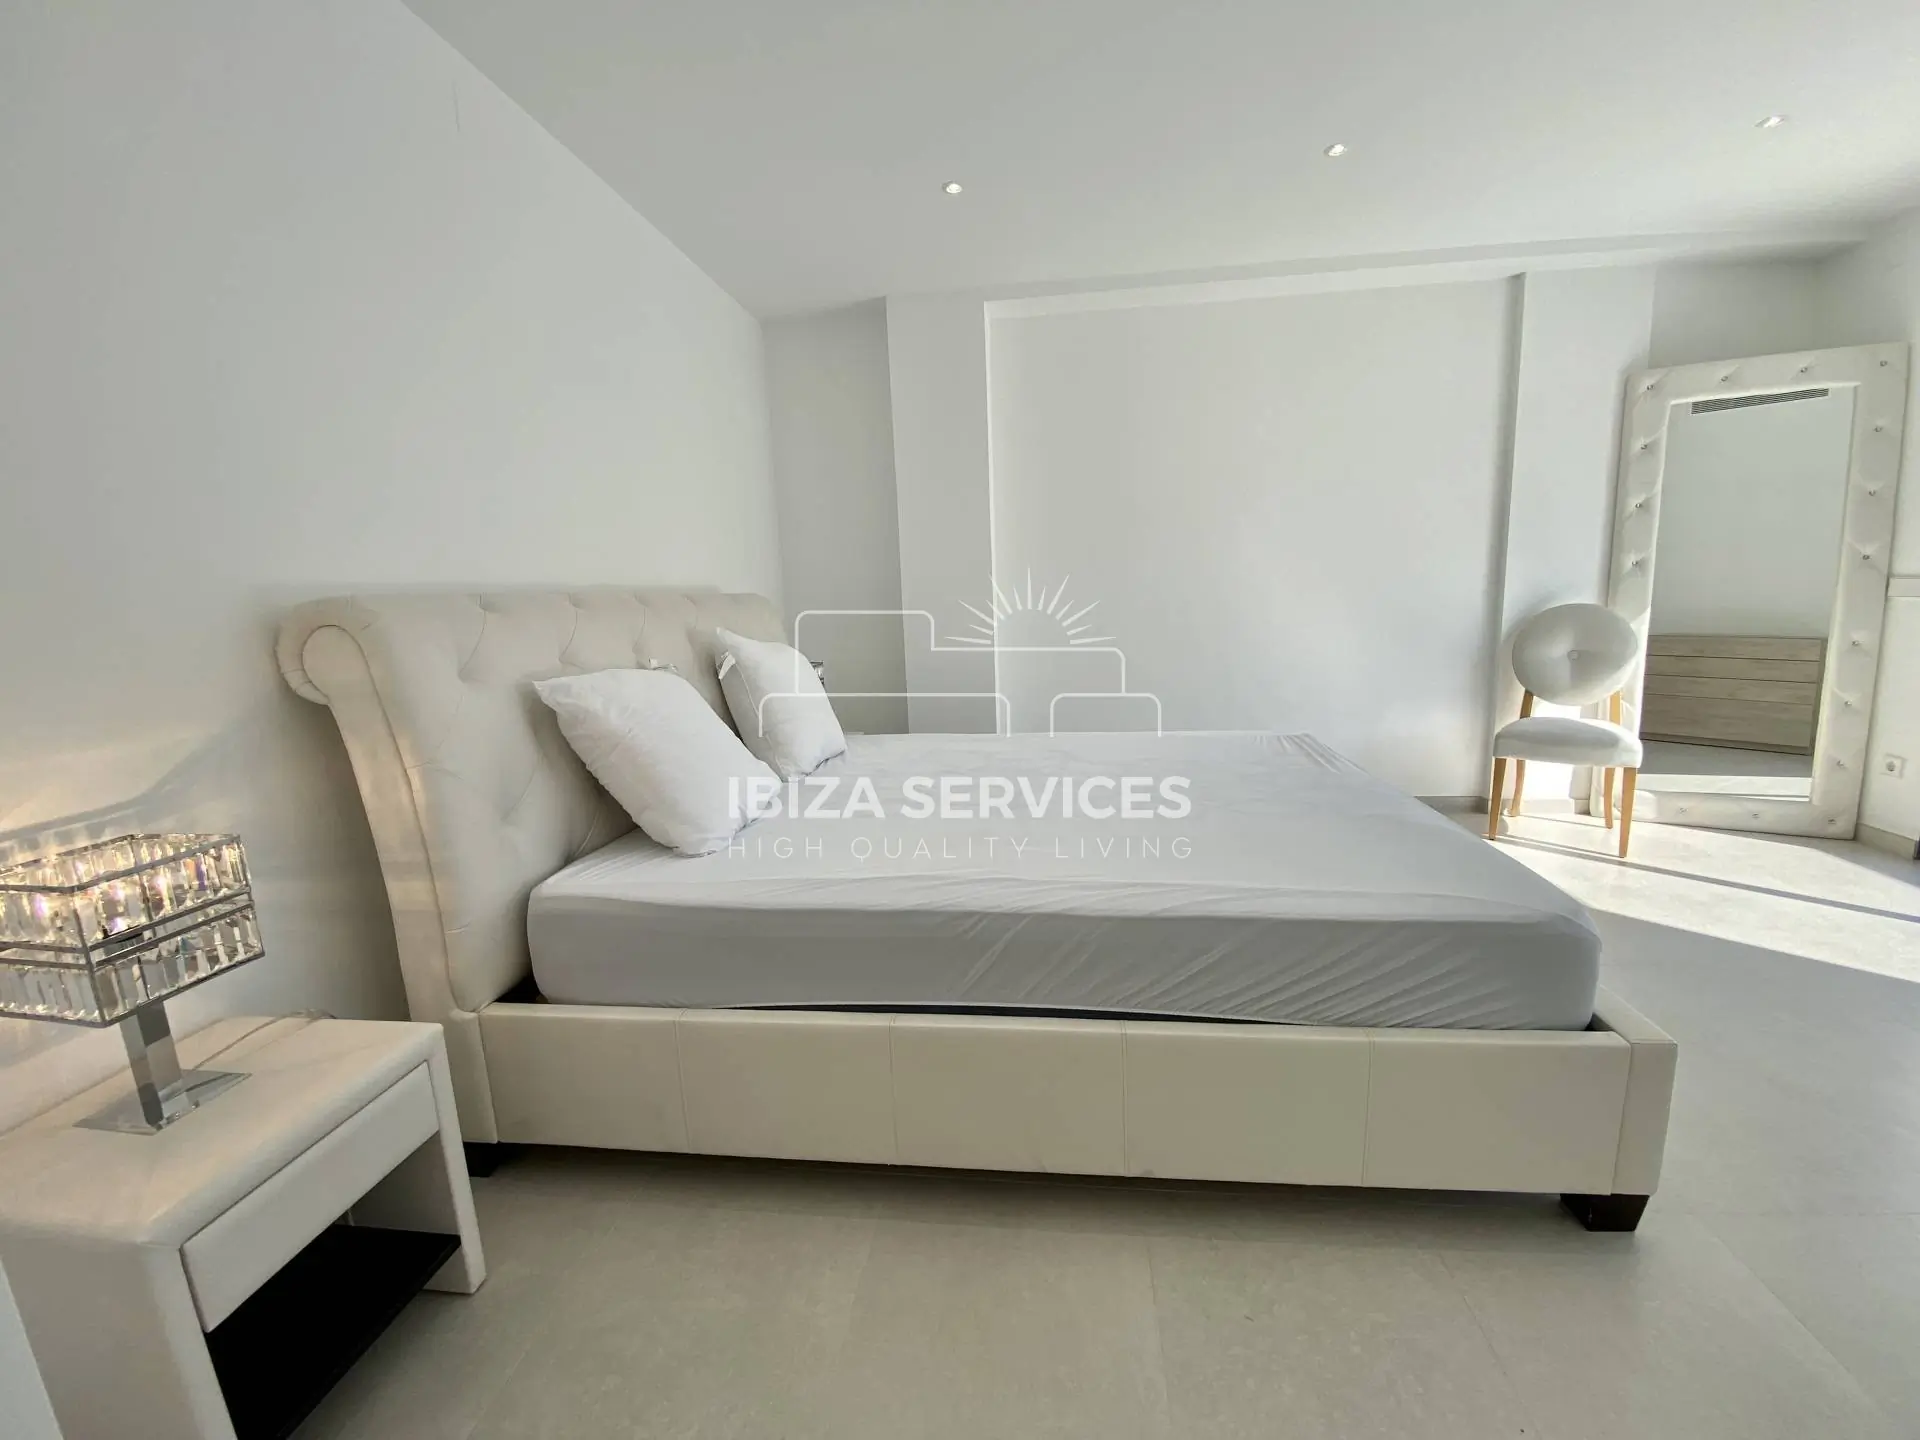 Komfortables Drei-Zimmer-Penthouse zum Verkauf in Santa Eulalia – Ibiza Island